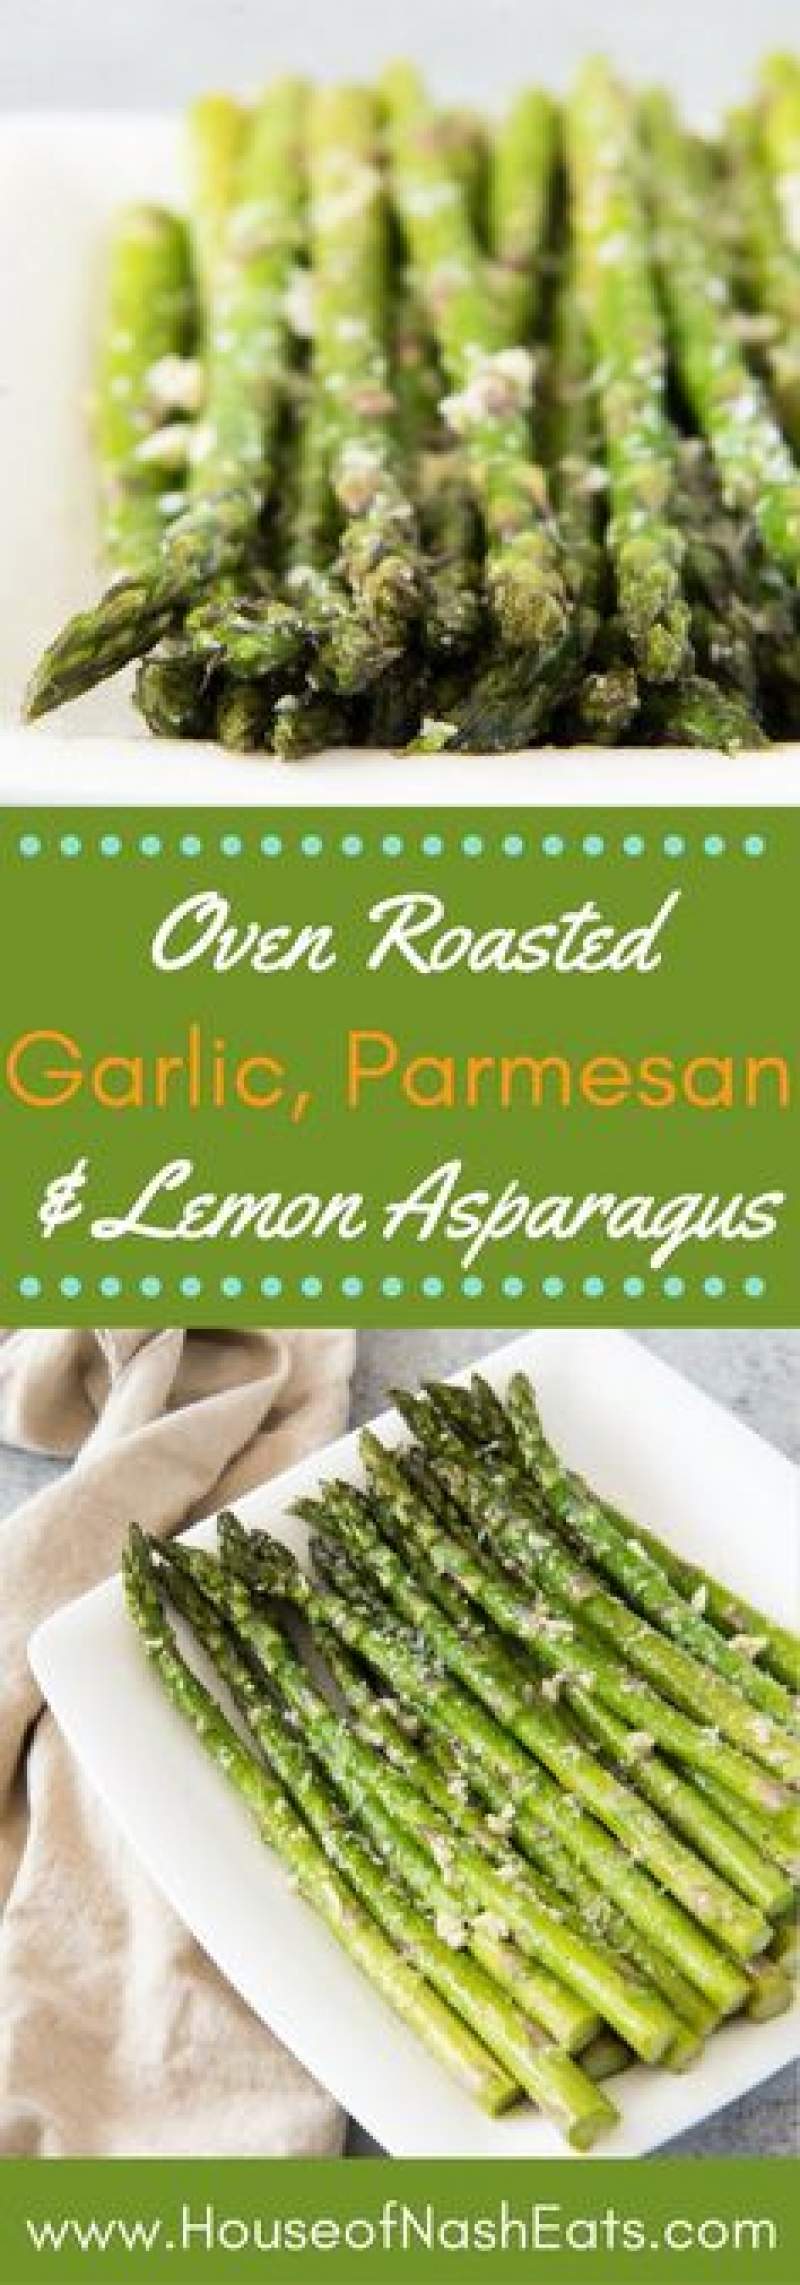 asparagus recipes for easter